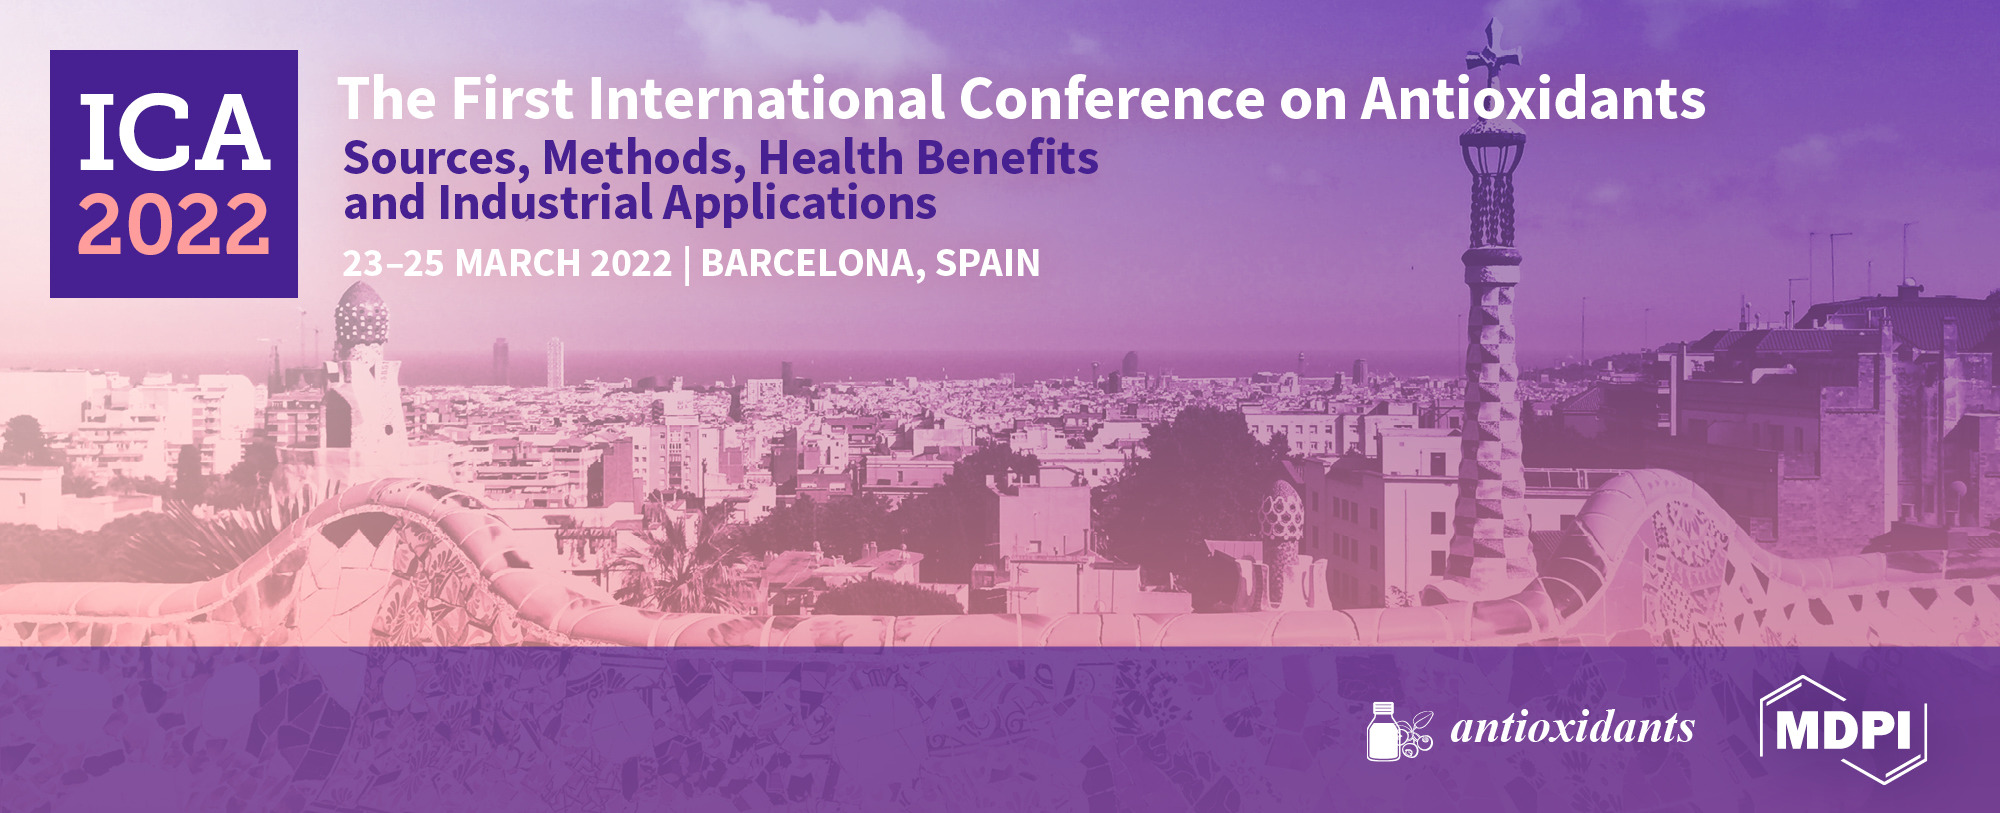 ICA2022. S’anuncia el Primer Congrés Internacional en Antioxidants, març 2022 (Barcelona)